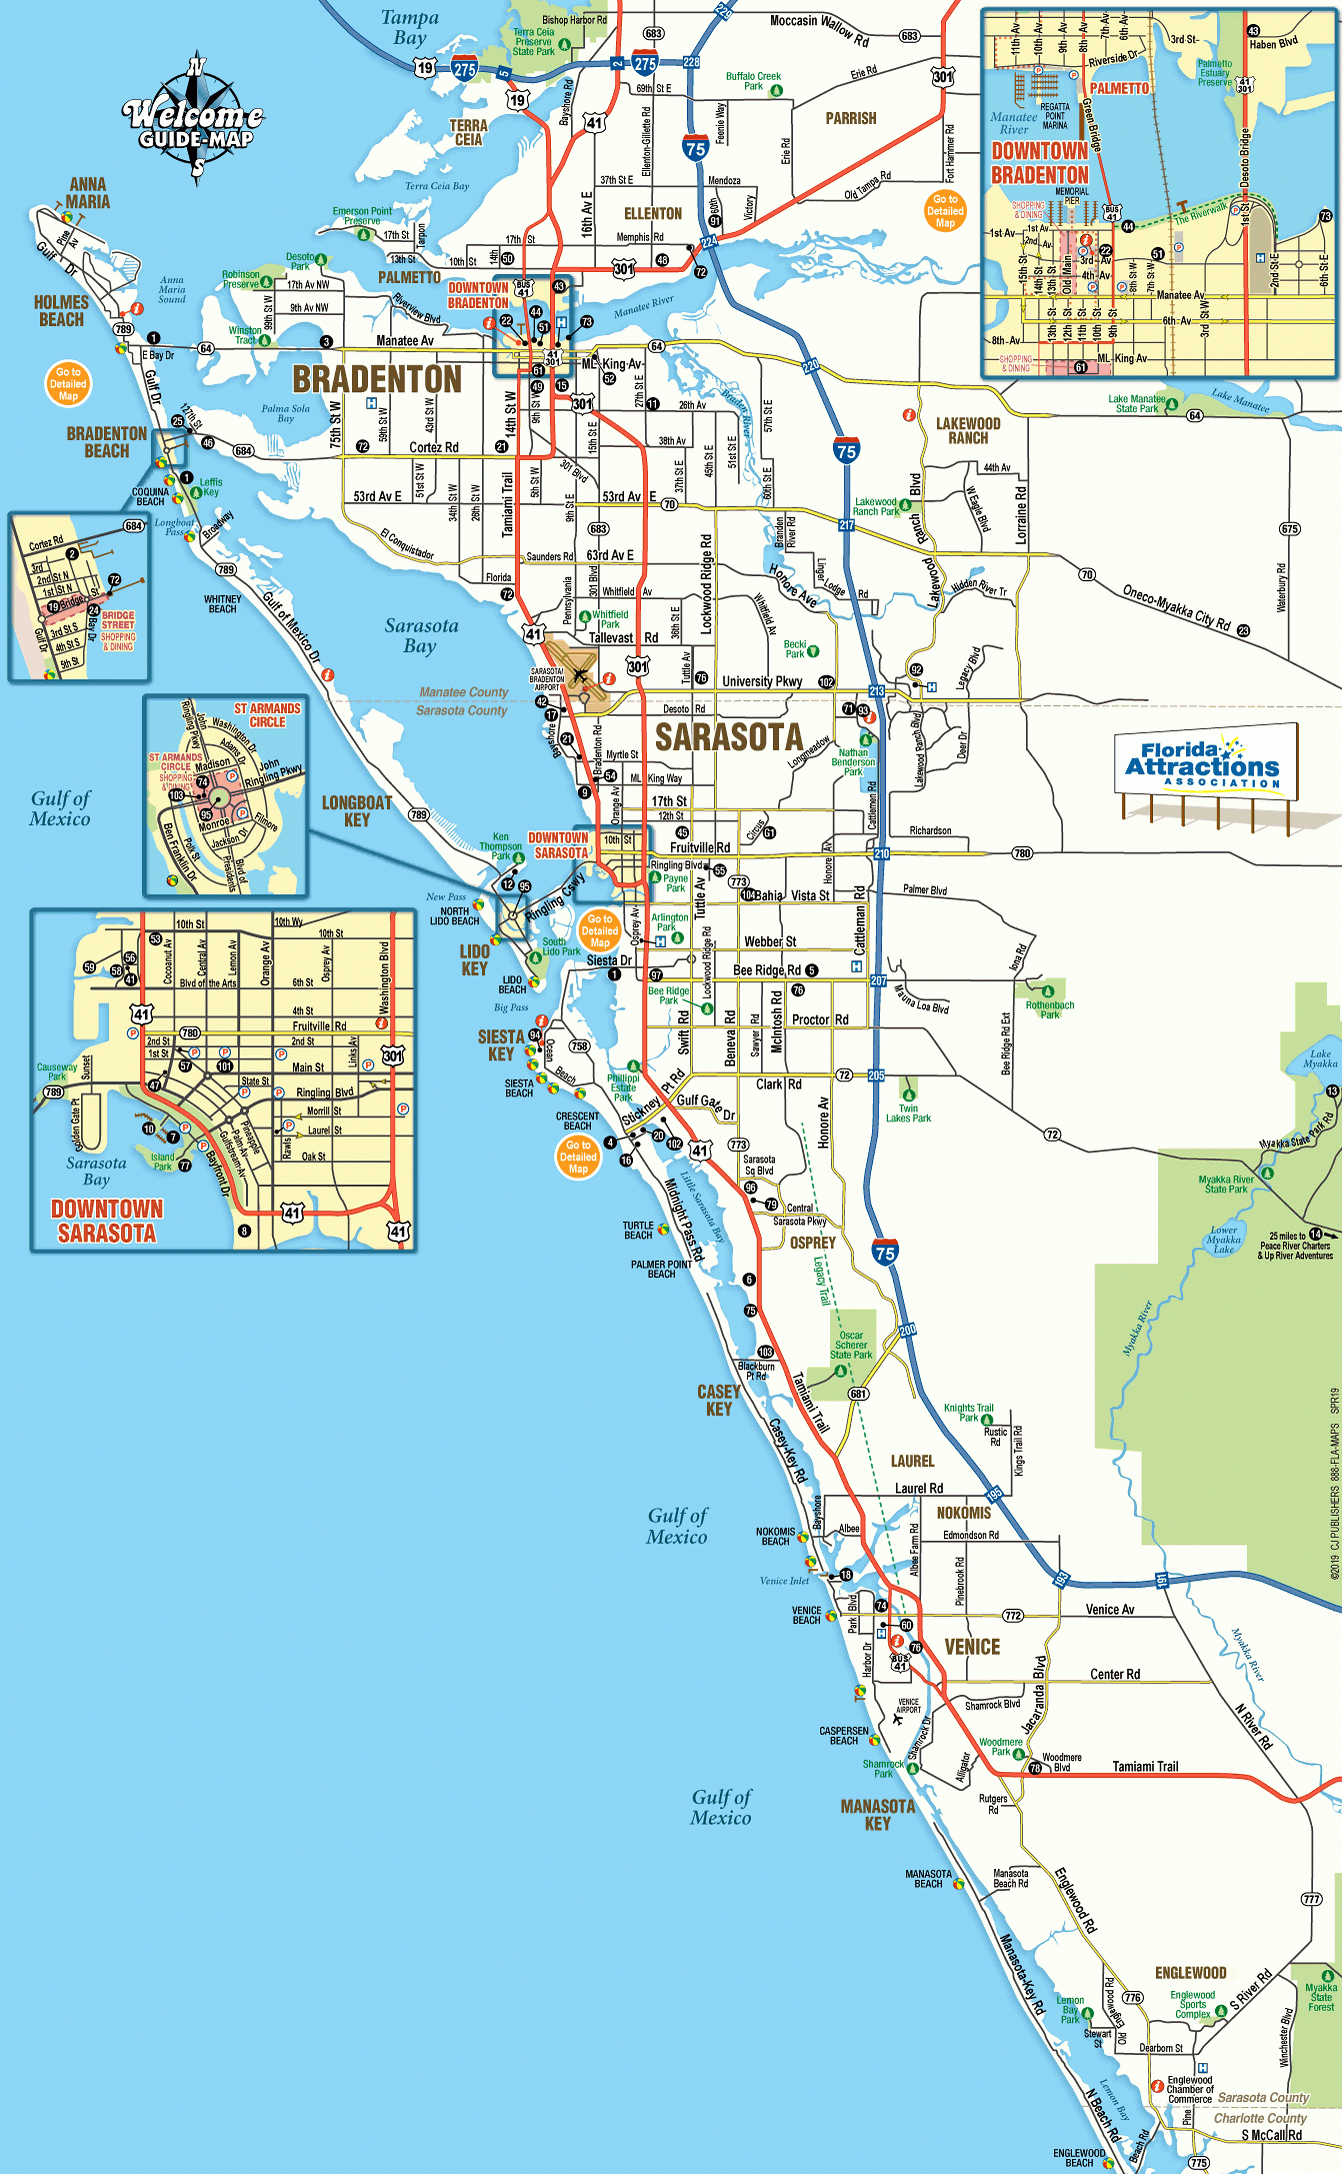 Map Of Sarasota And Bradenton Florida - Welcome Guide-Map To - Manasota Key Florida Map